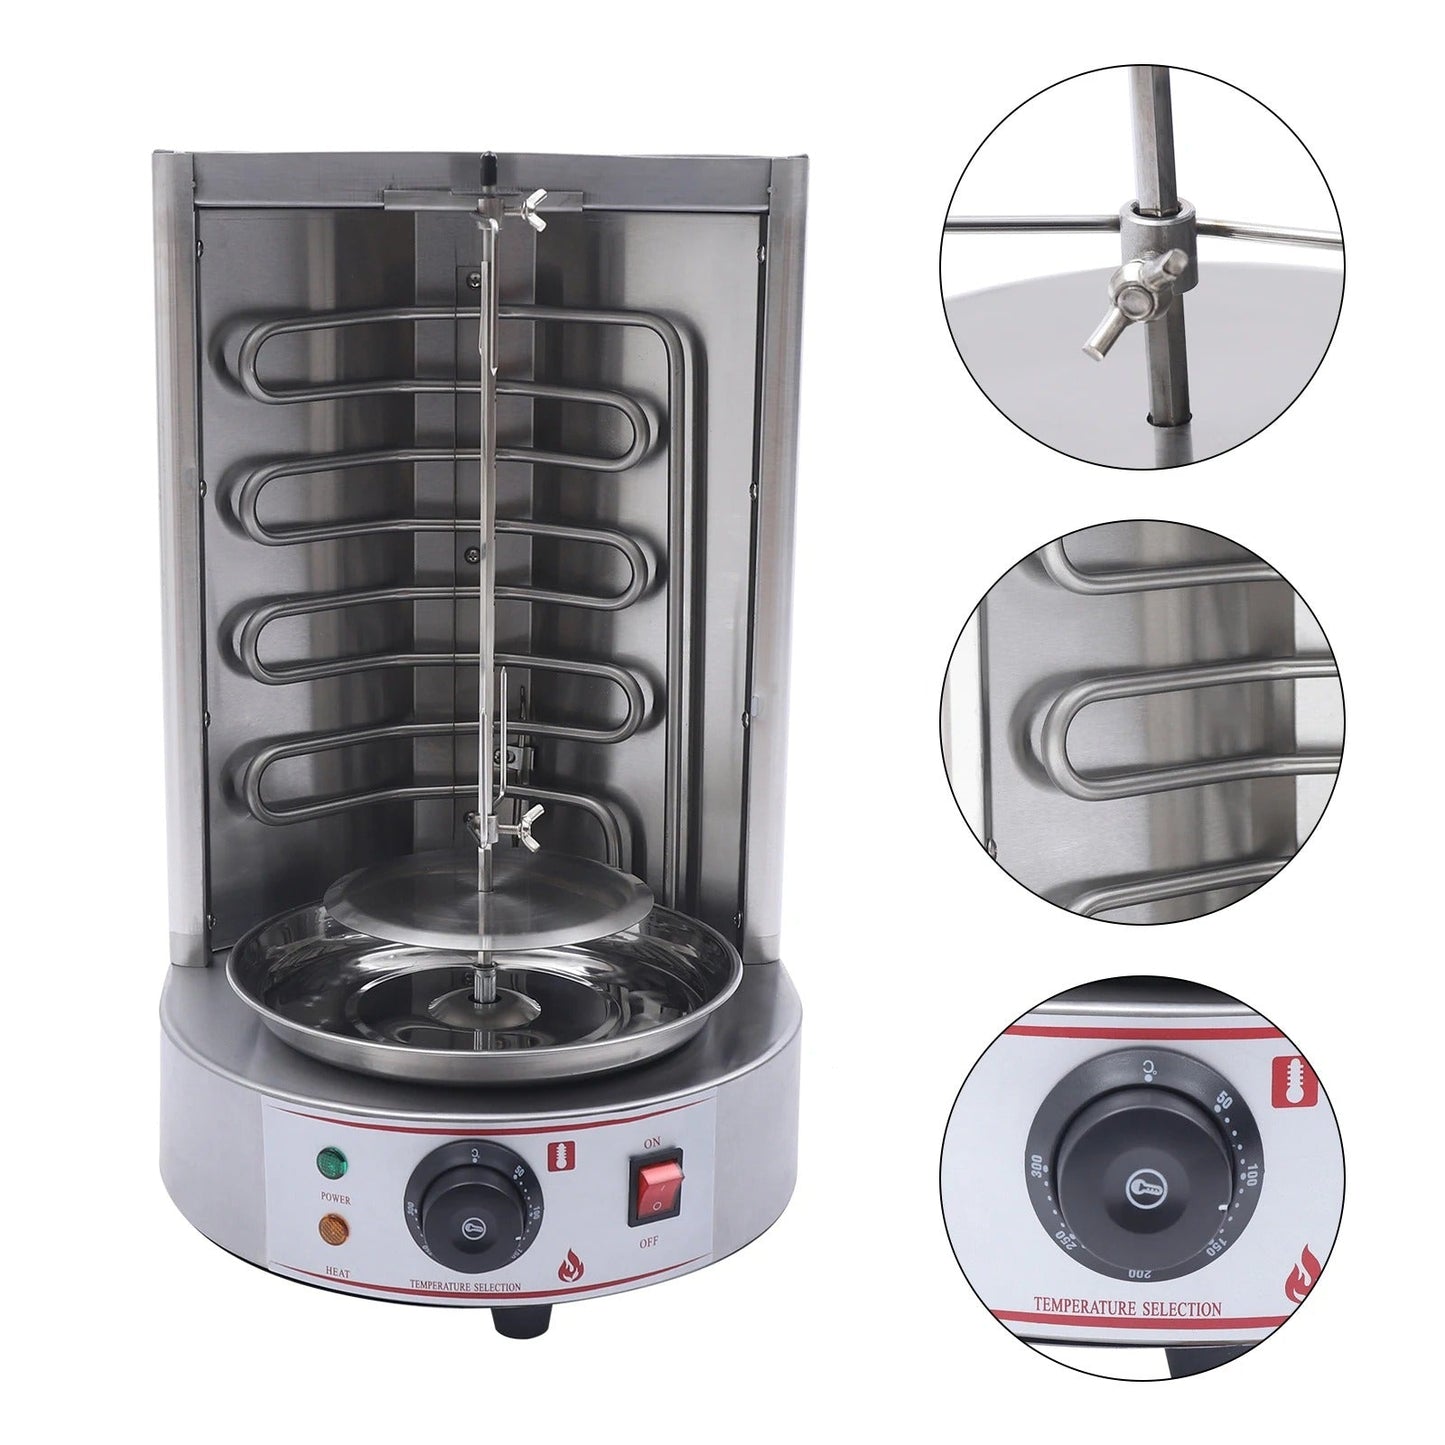 Electric Vertical Broiler Gyro Grill Shawarma Machine - Kebab Machine Stainless Steel for Rotisserie Restaurant,  Home & Kitchen